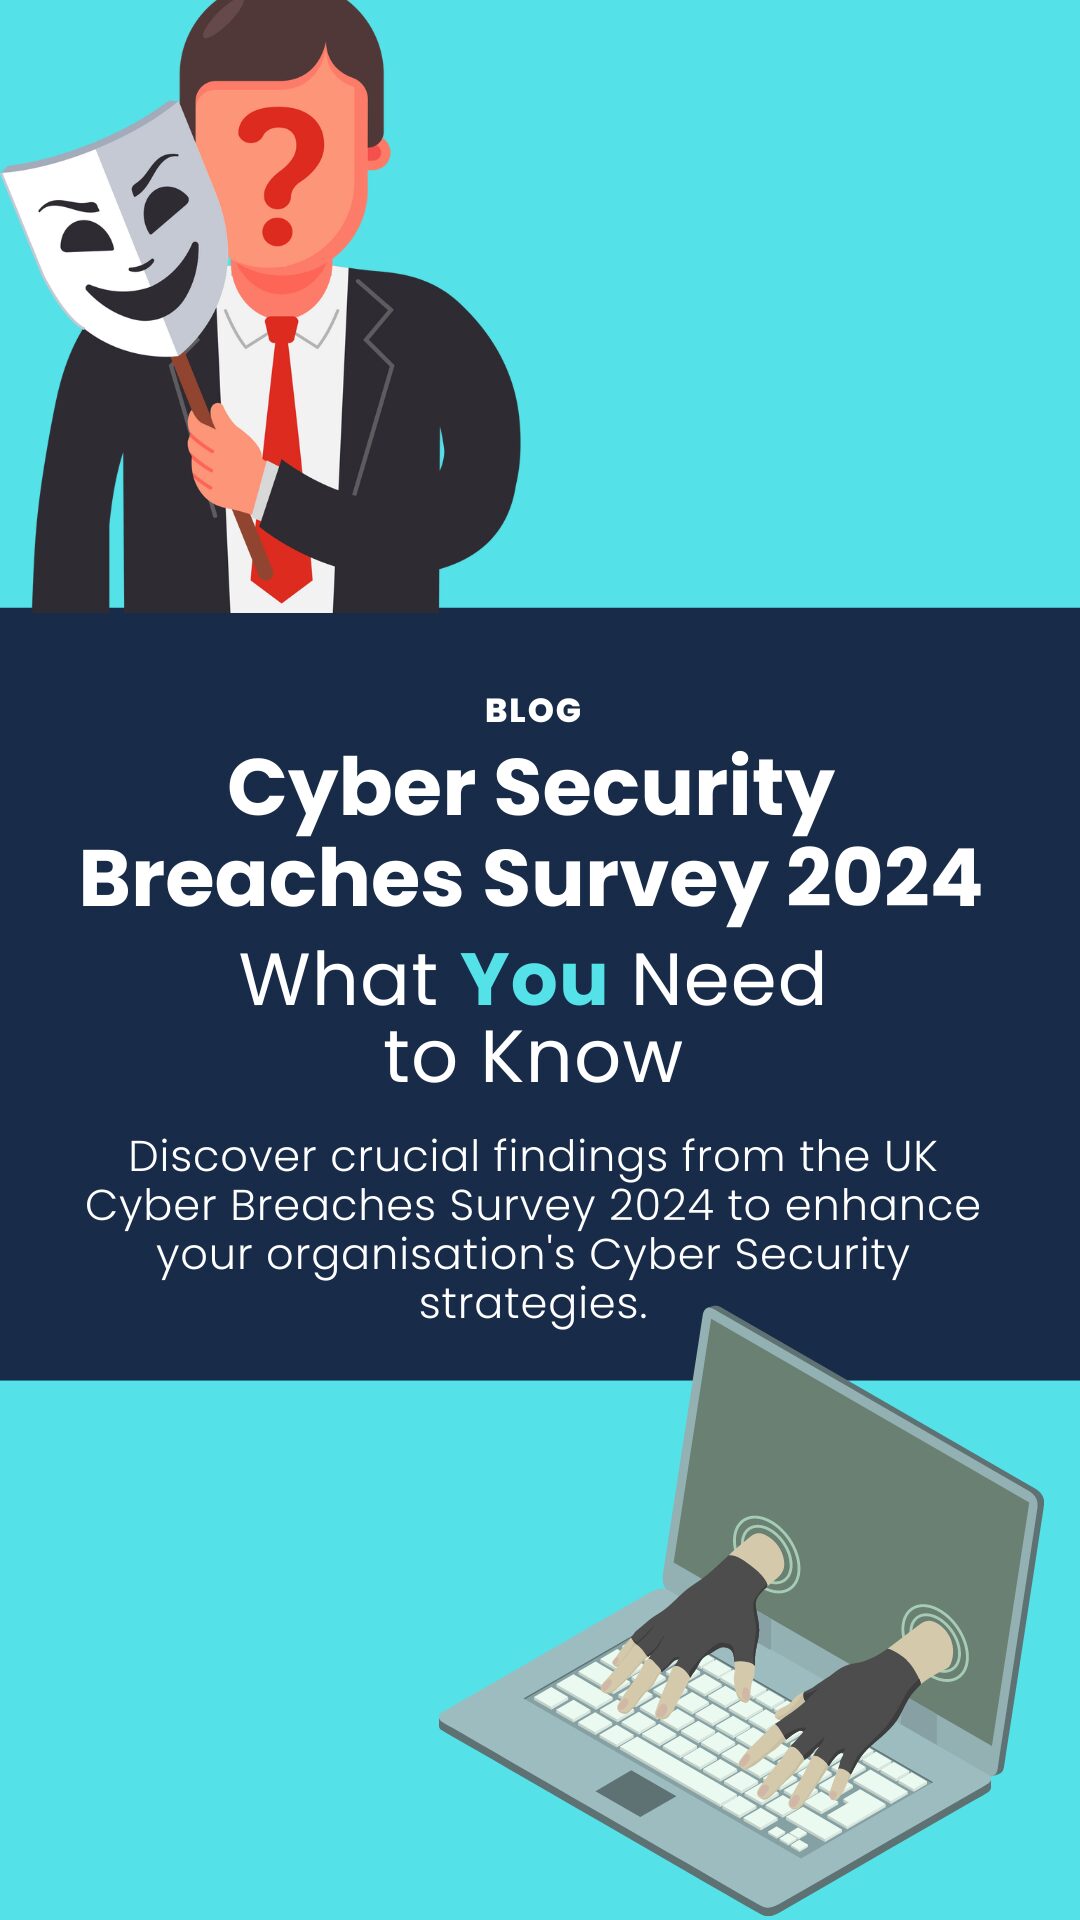 The Cyber Breaches Survey 2024 blog description